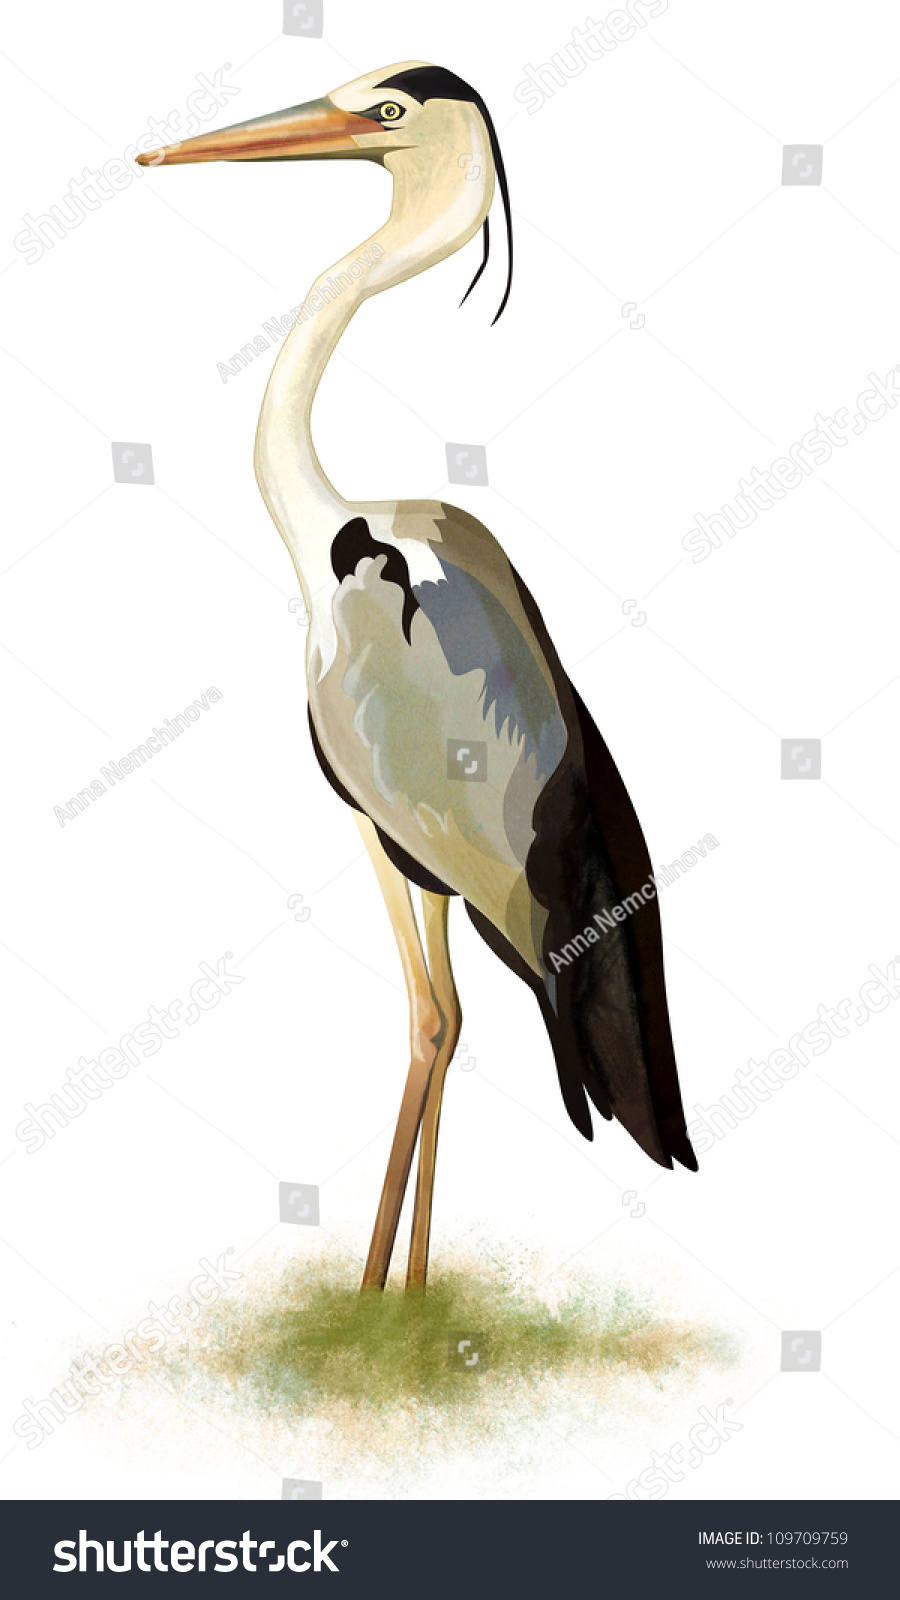 Heron Bird Stock Photo 109709759 : Shutterstock